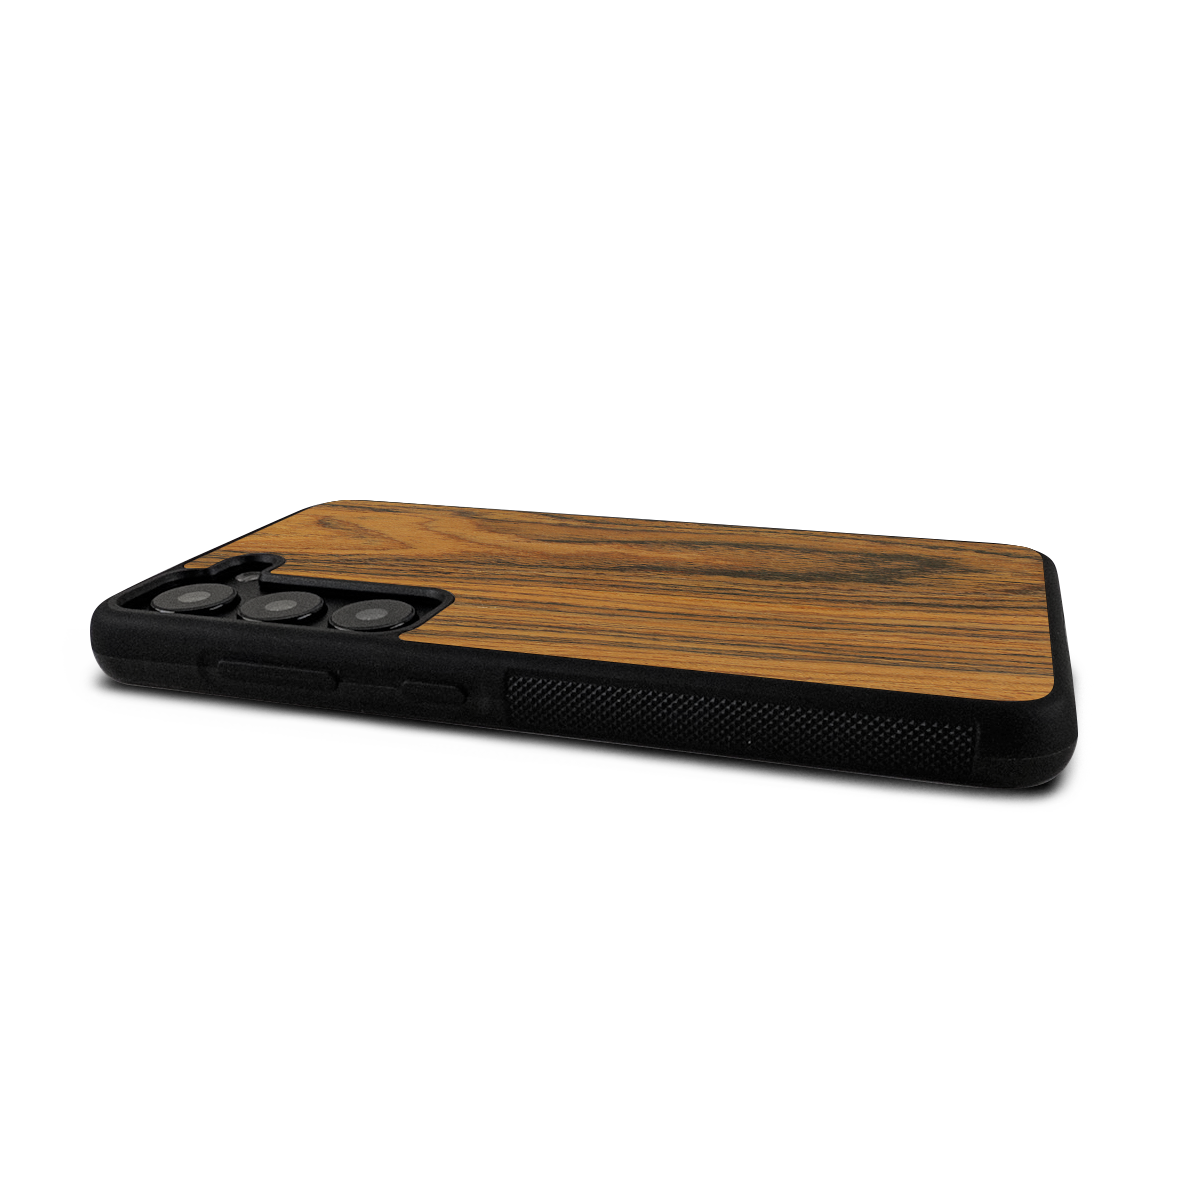 Samsung Galaxy S23 — #WoodBack Explorer Case